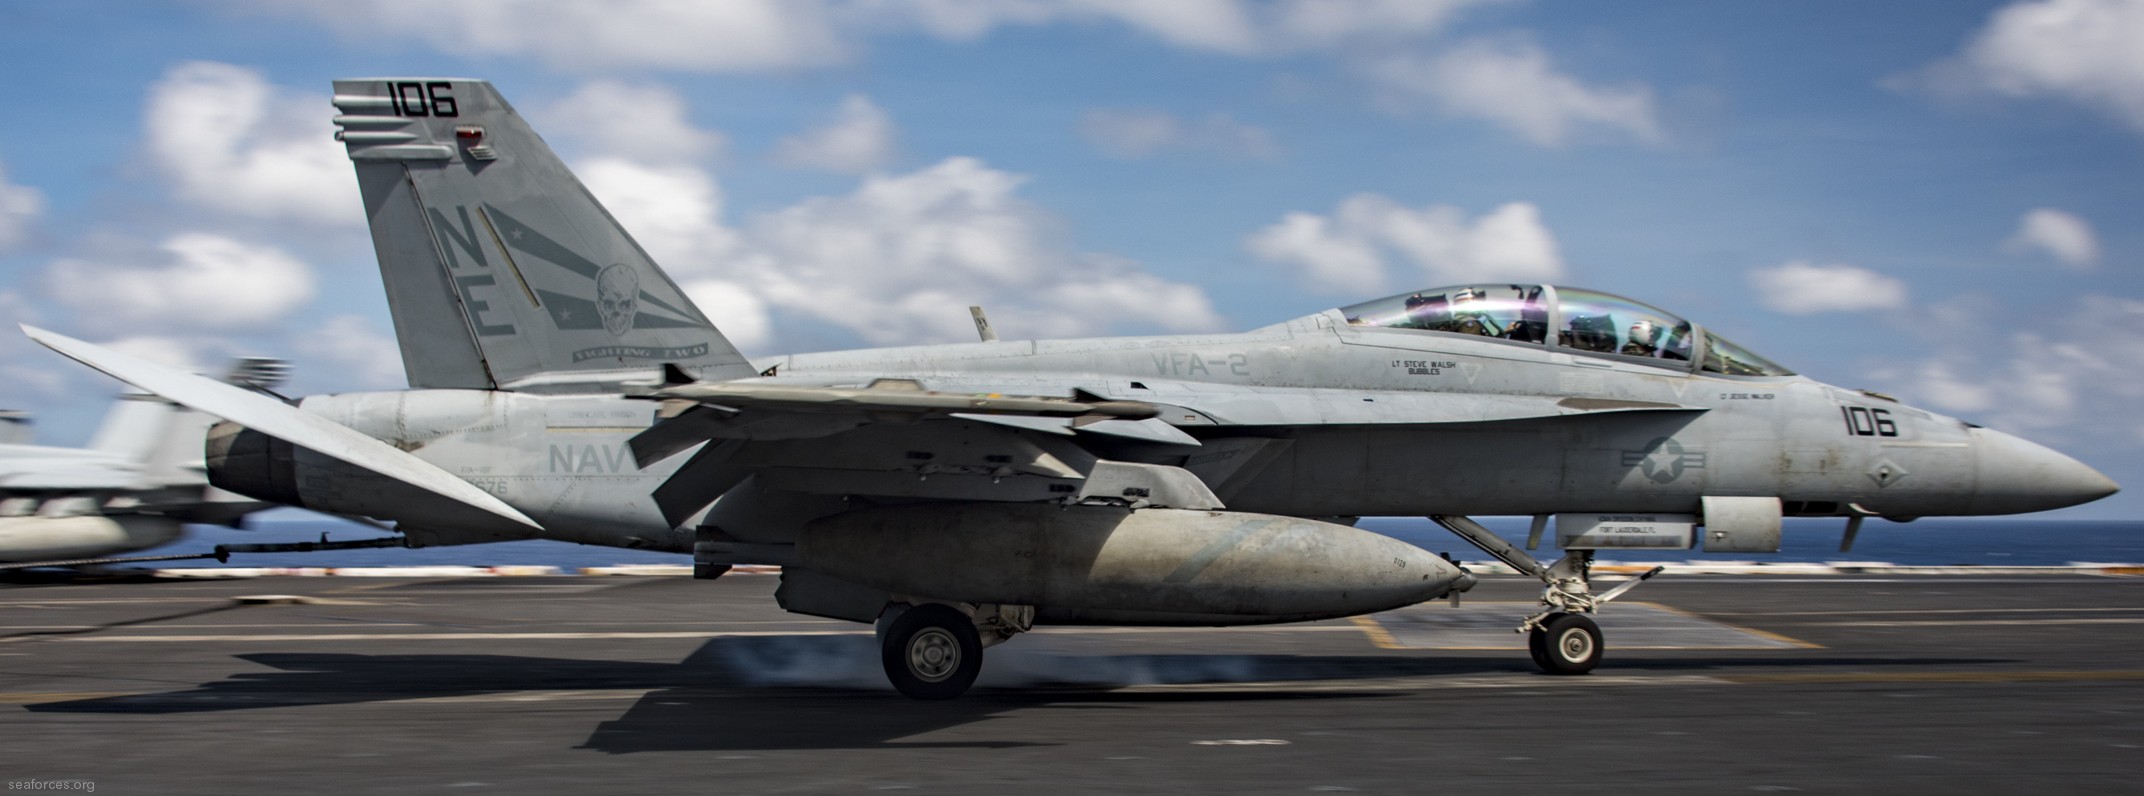 vfa-2 bounty hunters strike fighter squadron us navy f/a-18f super hornet carrier air wing cvw-2 uss carl vinson cvn-70 15